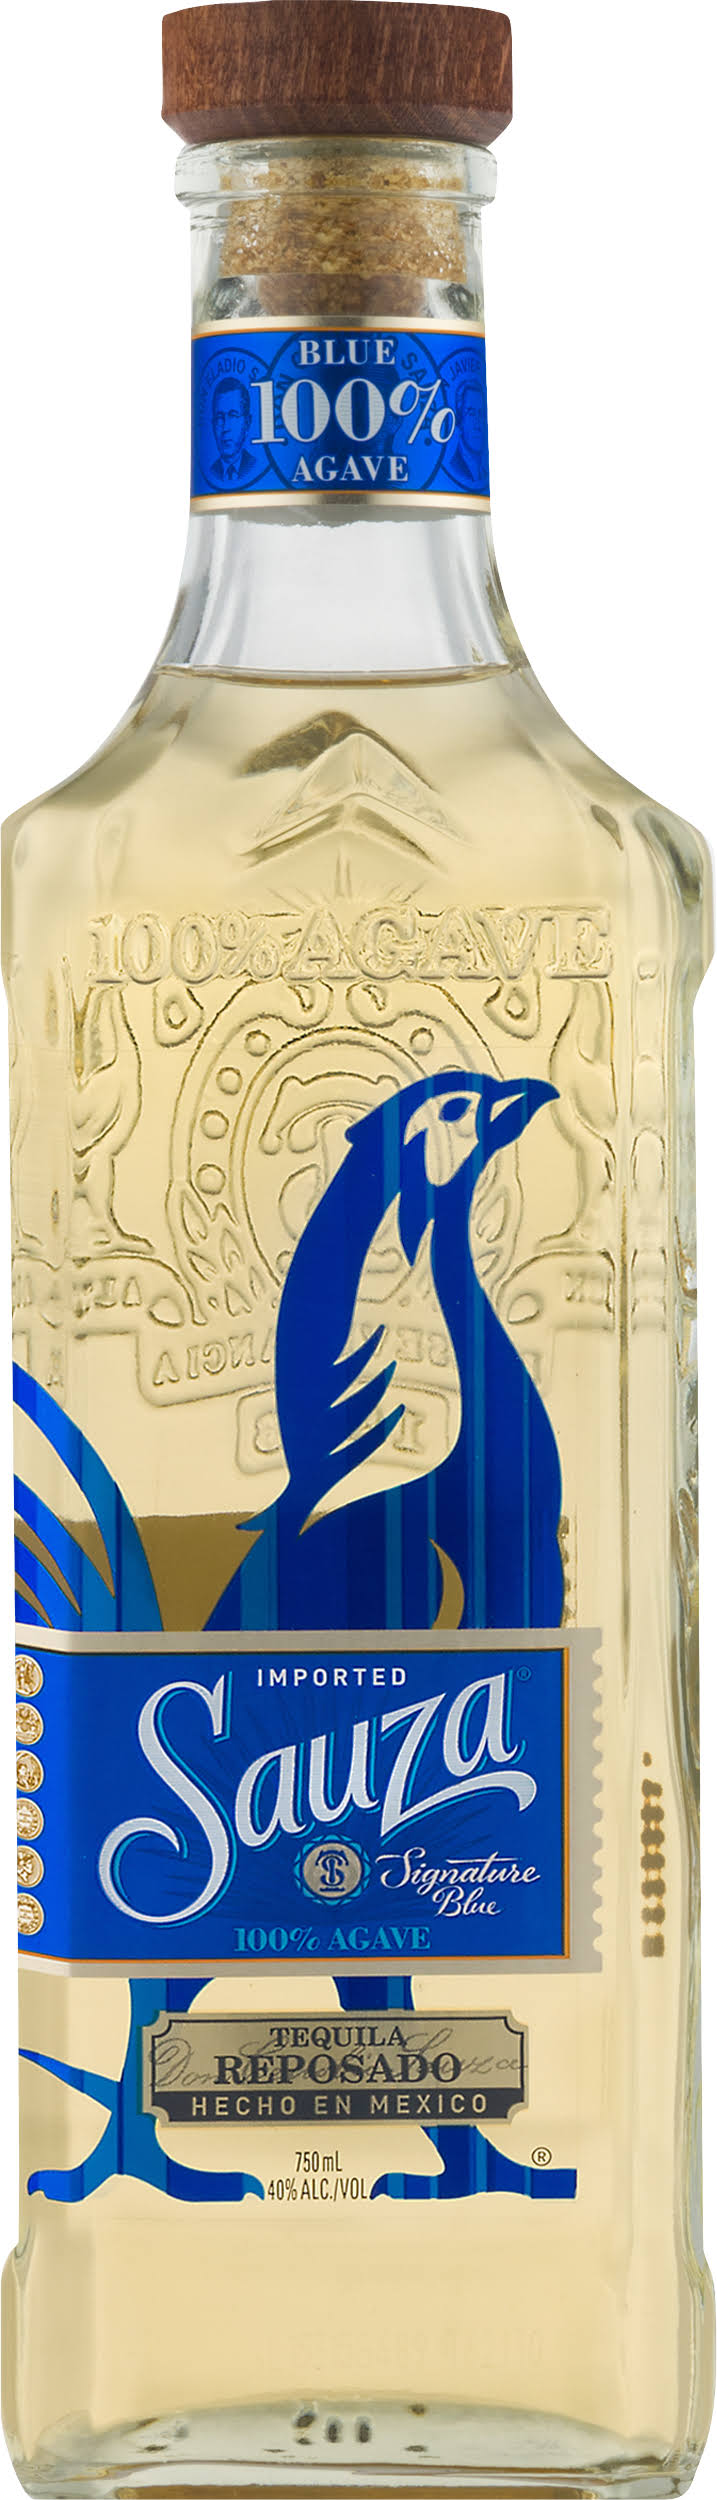 Sauza Signature Blue Reposado Tequila - 750ml